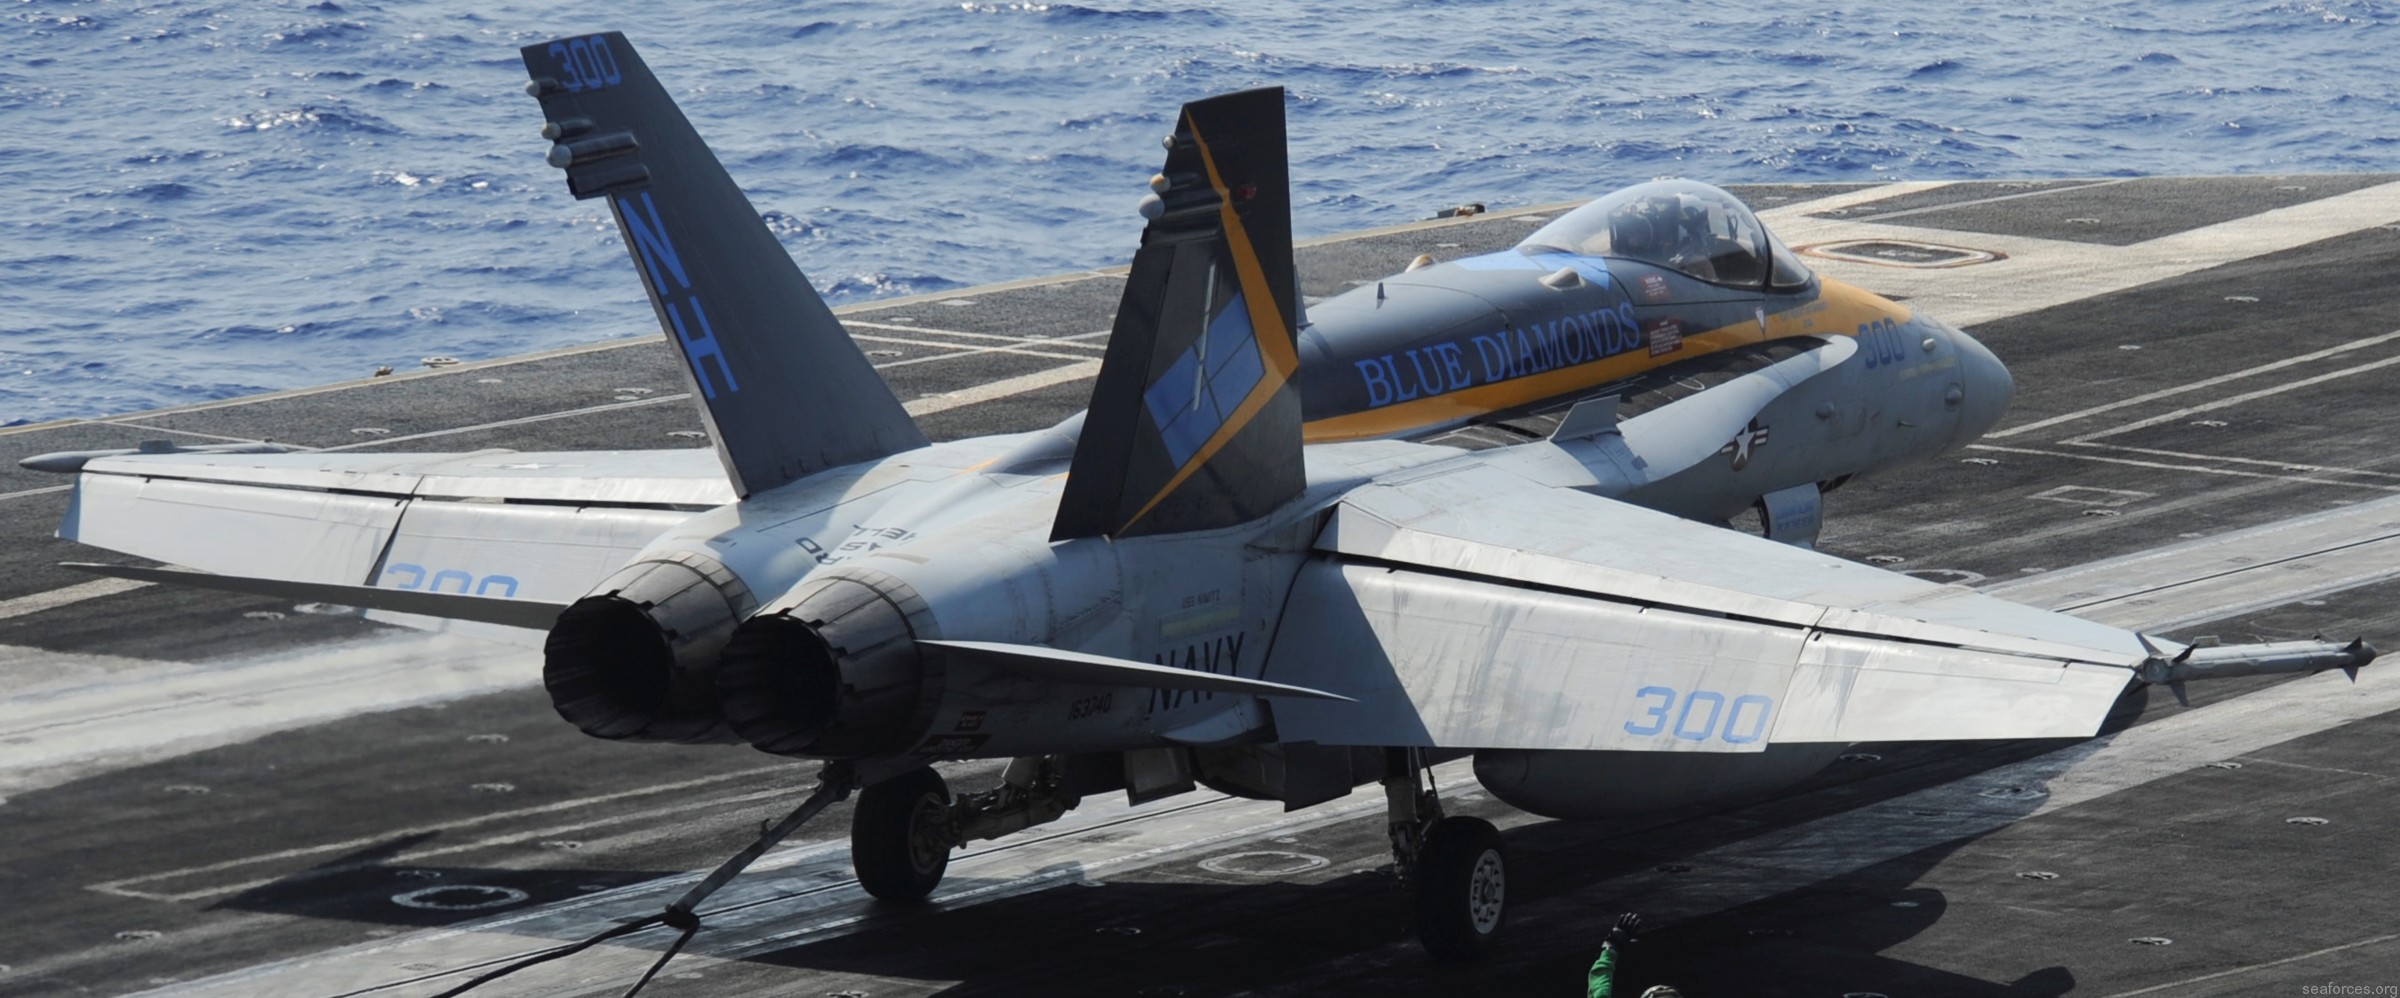 vfa-146 blue diamonds strike fighter squadron f/a-18c hornet carrier air wing cvw-11 uss nimitz cvn-68 31